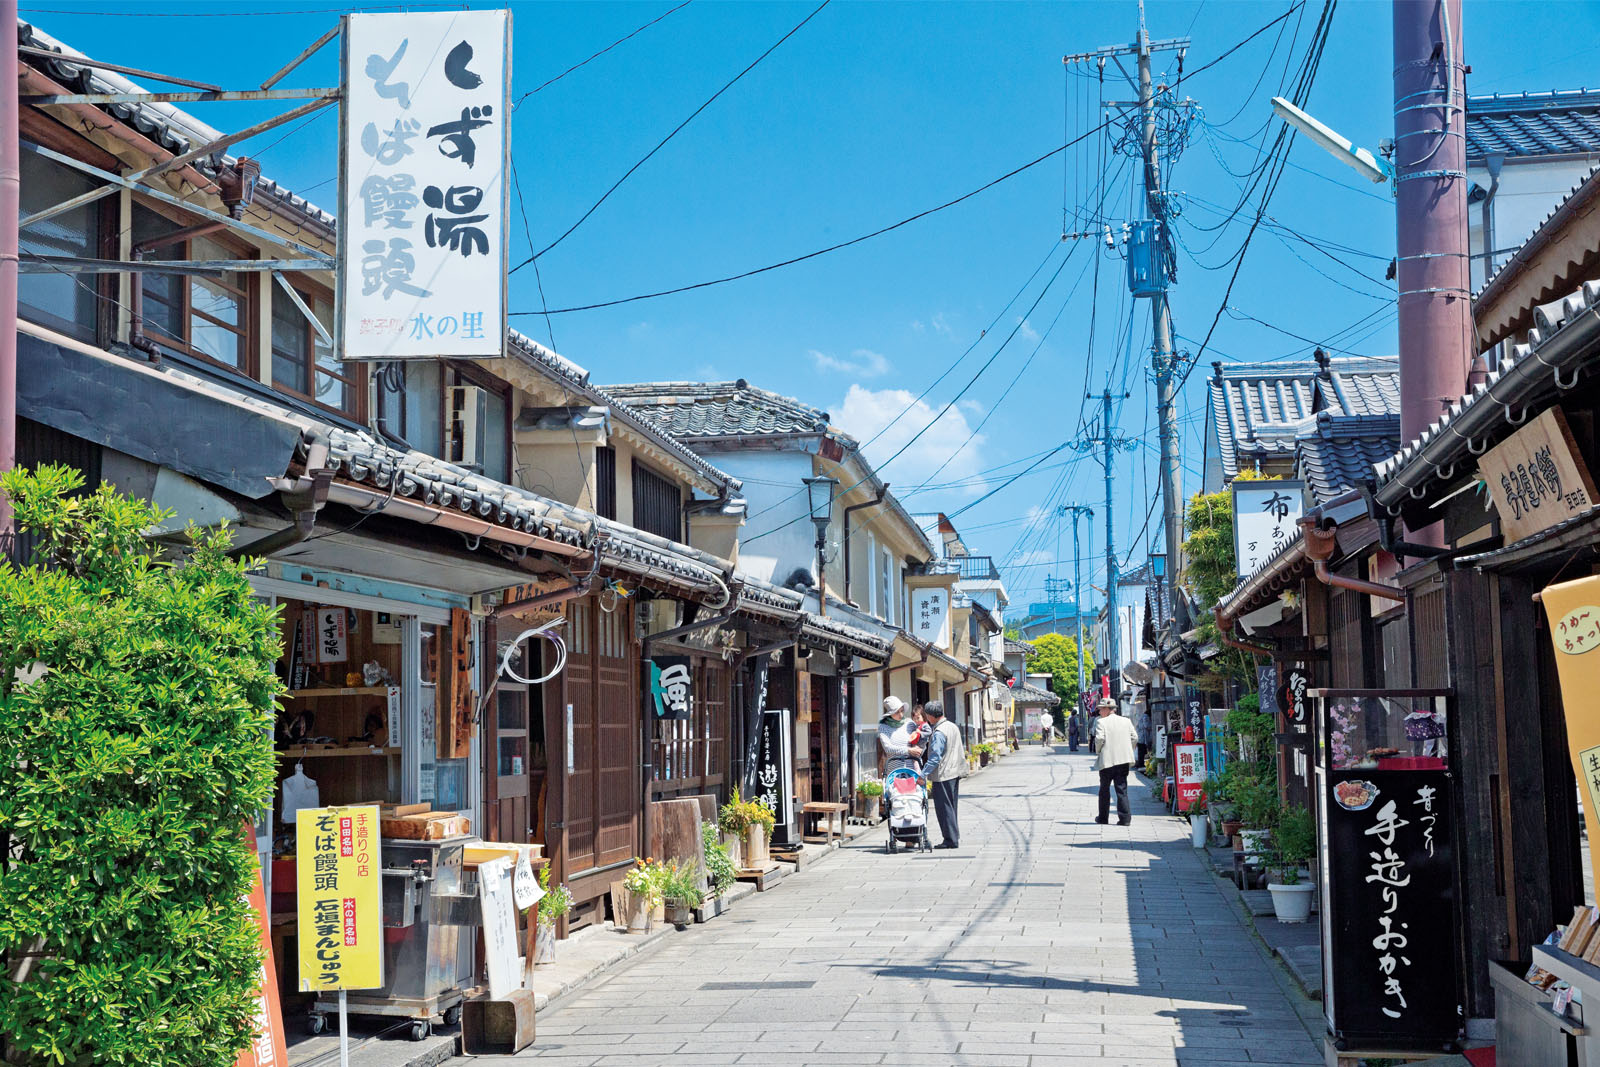 Street view on Fukuoka